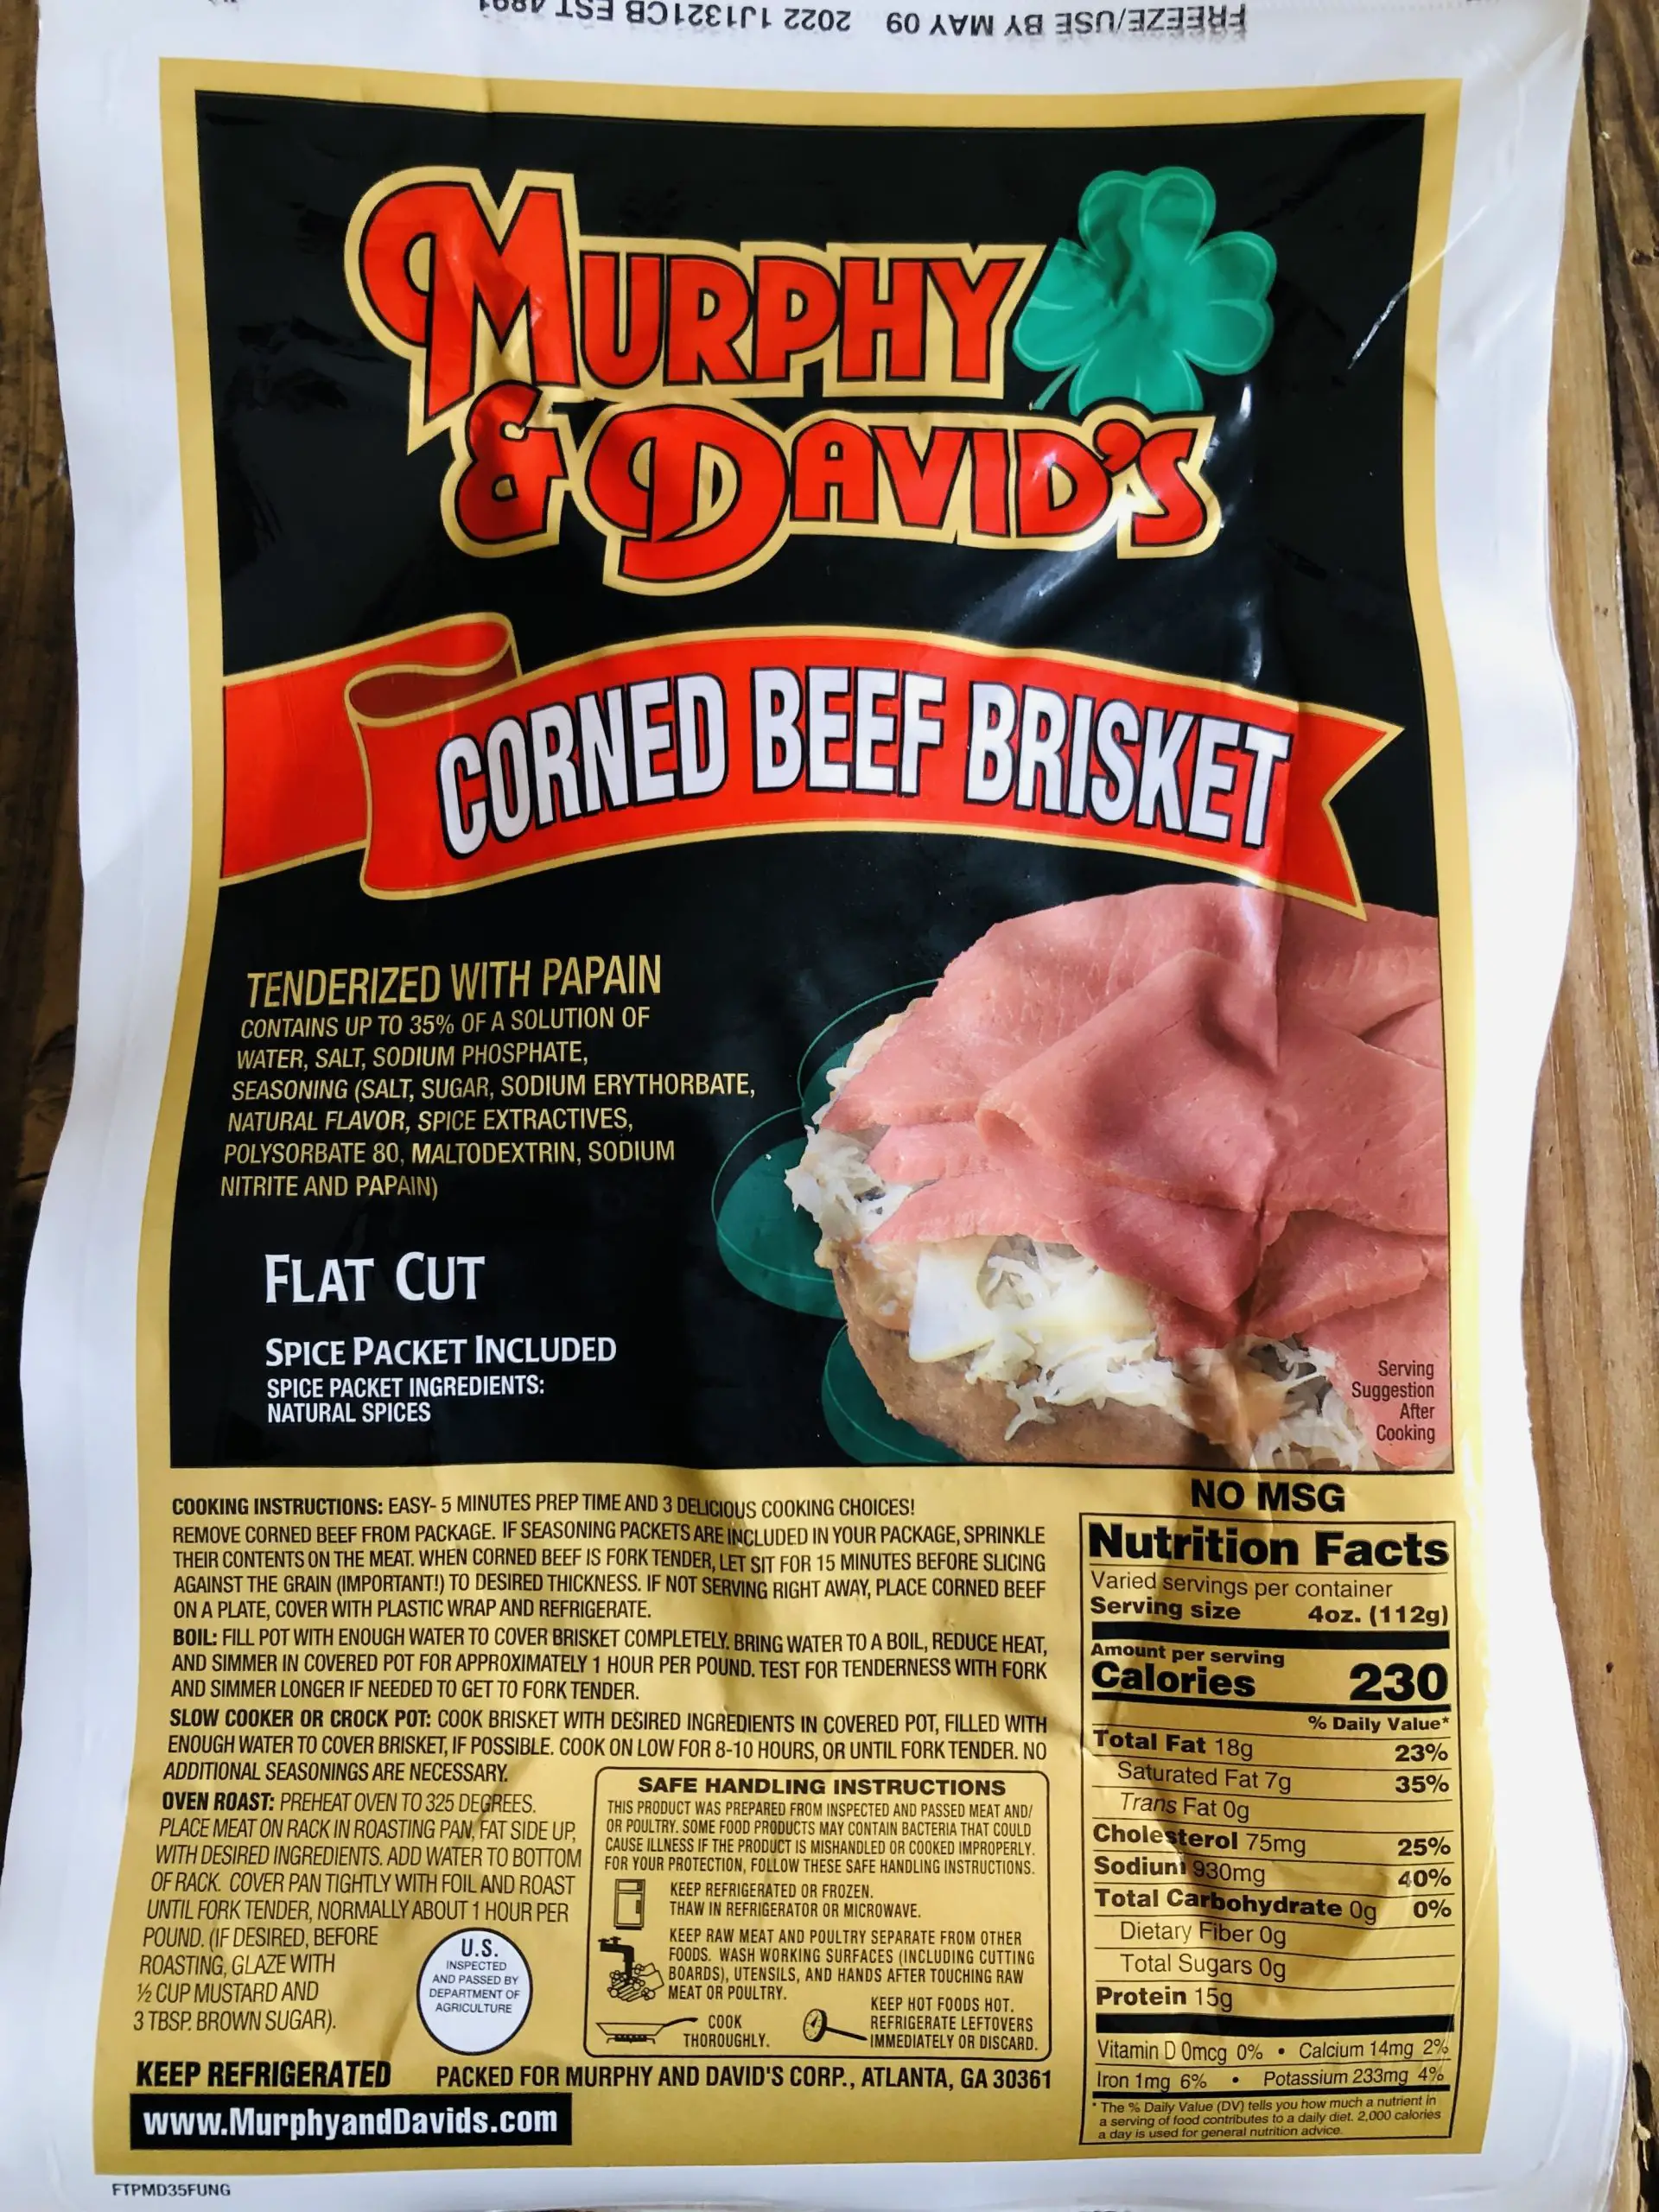 A package of Murphy & David's Corned Beef Brisket